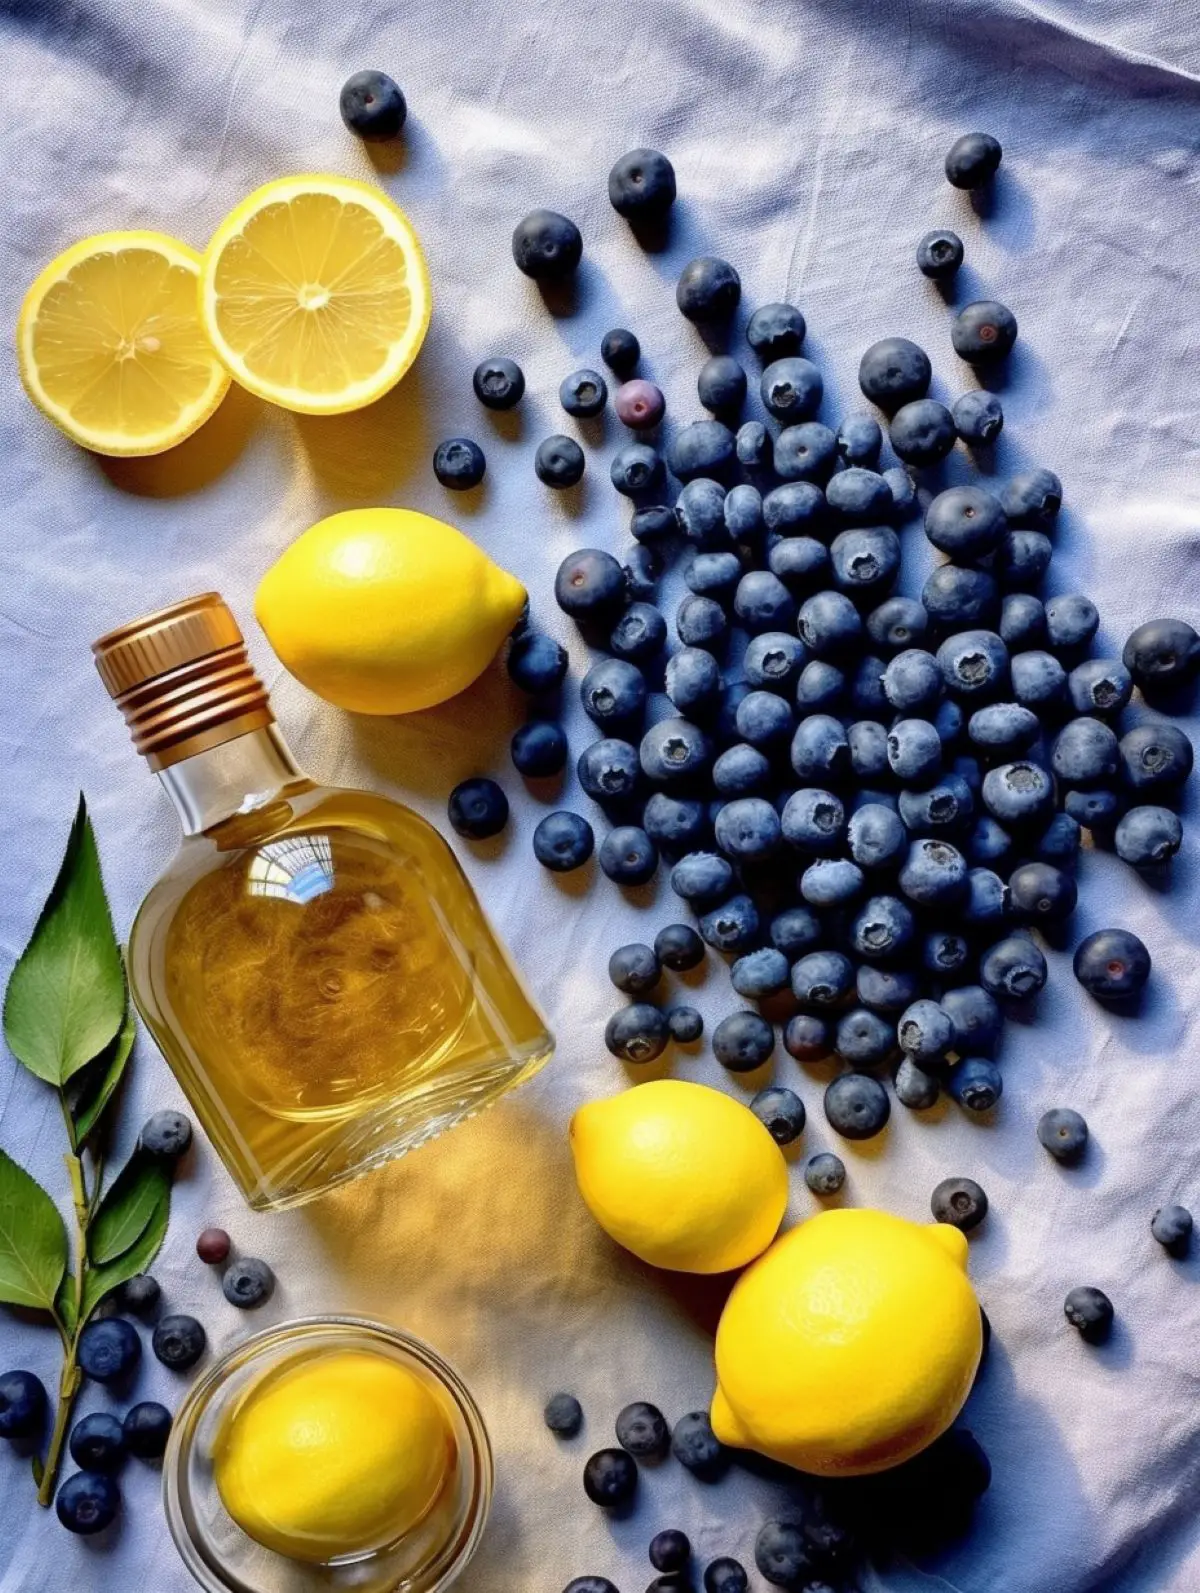 Blueberry cocktail ingredients including fresh blueberries, fresh lemons, and vodka.